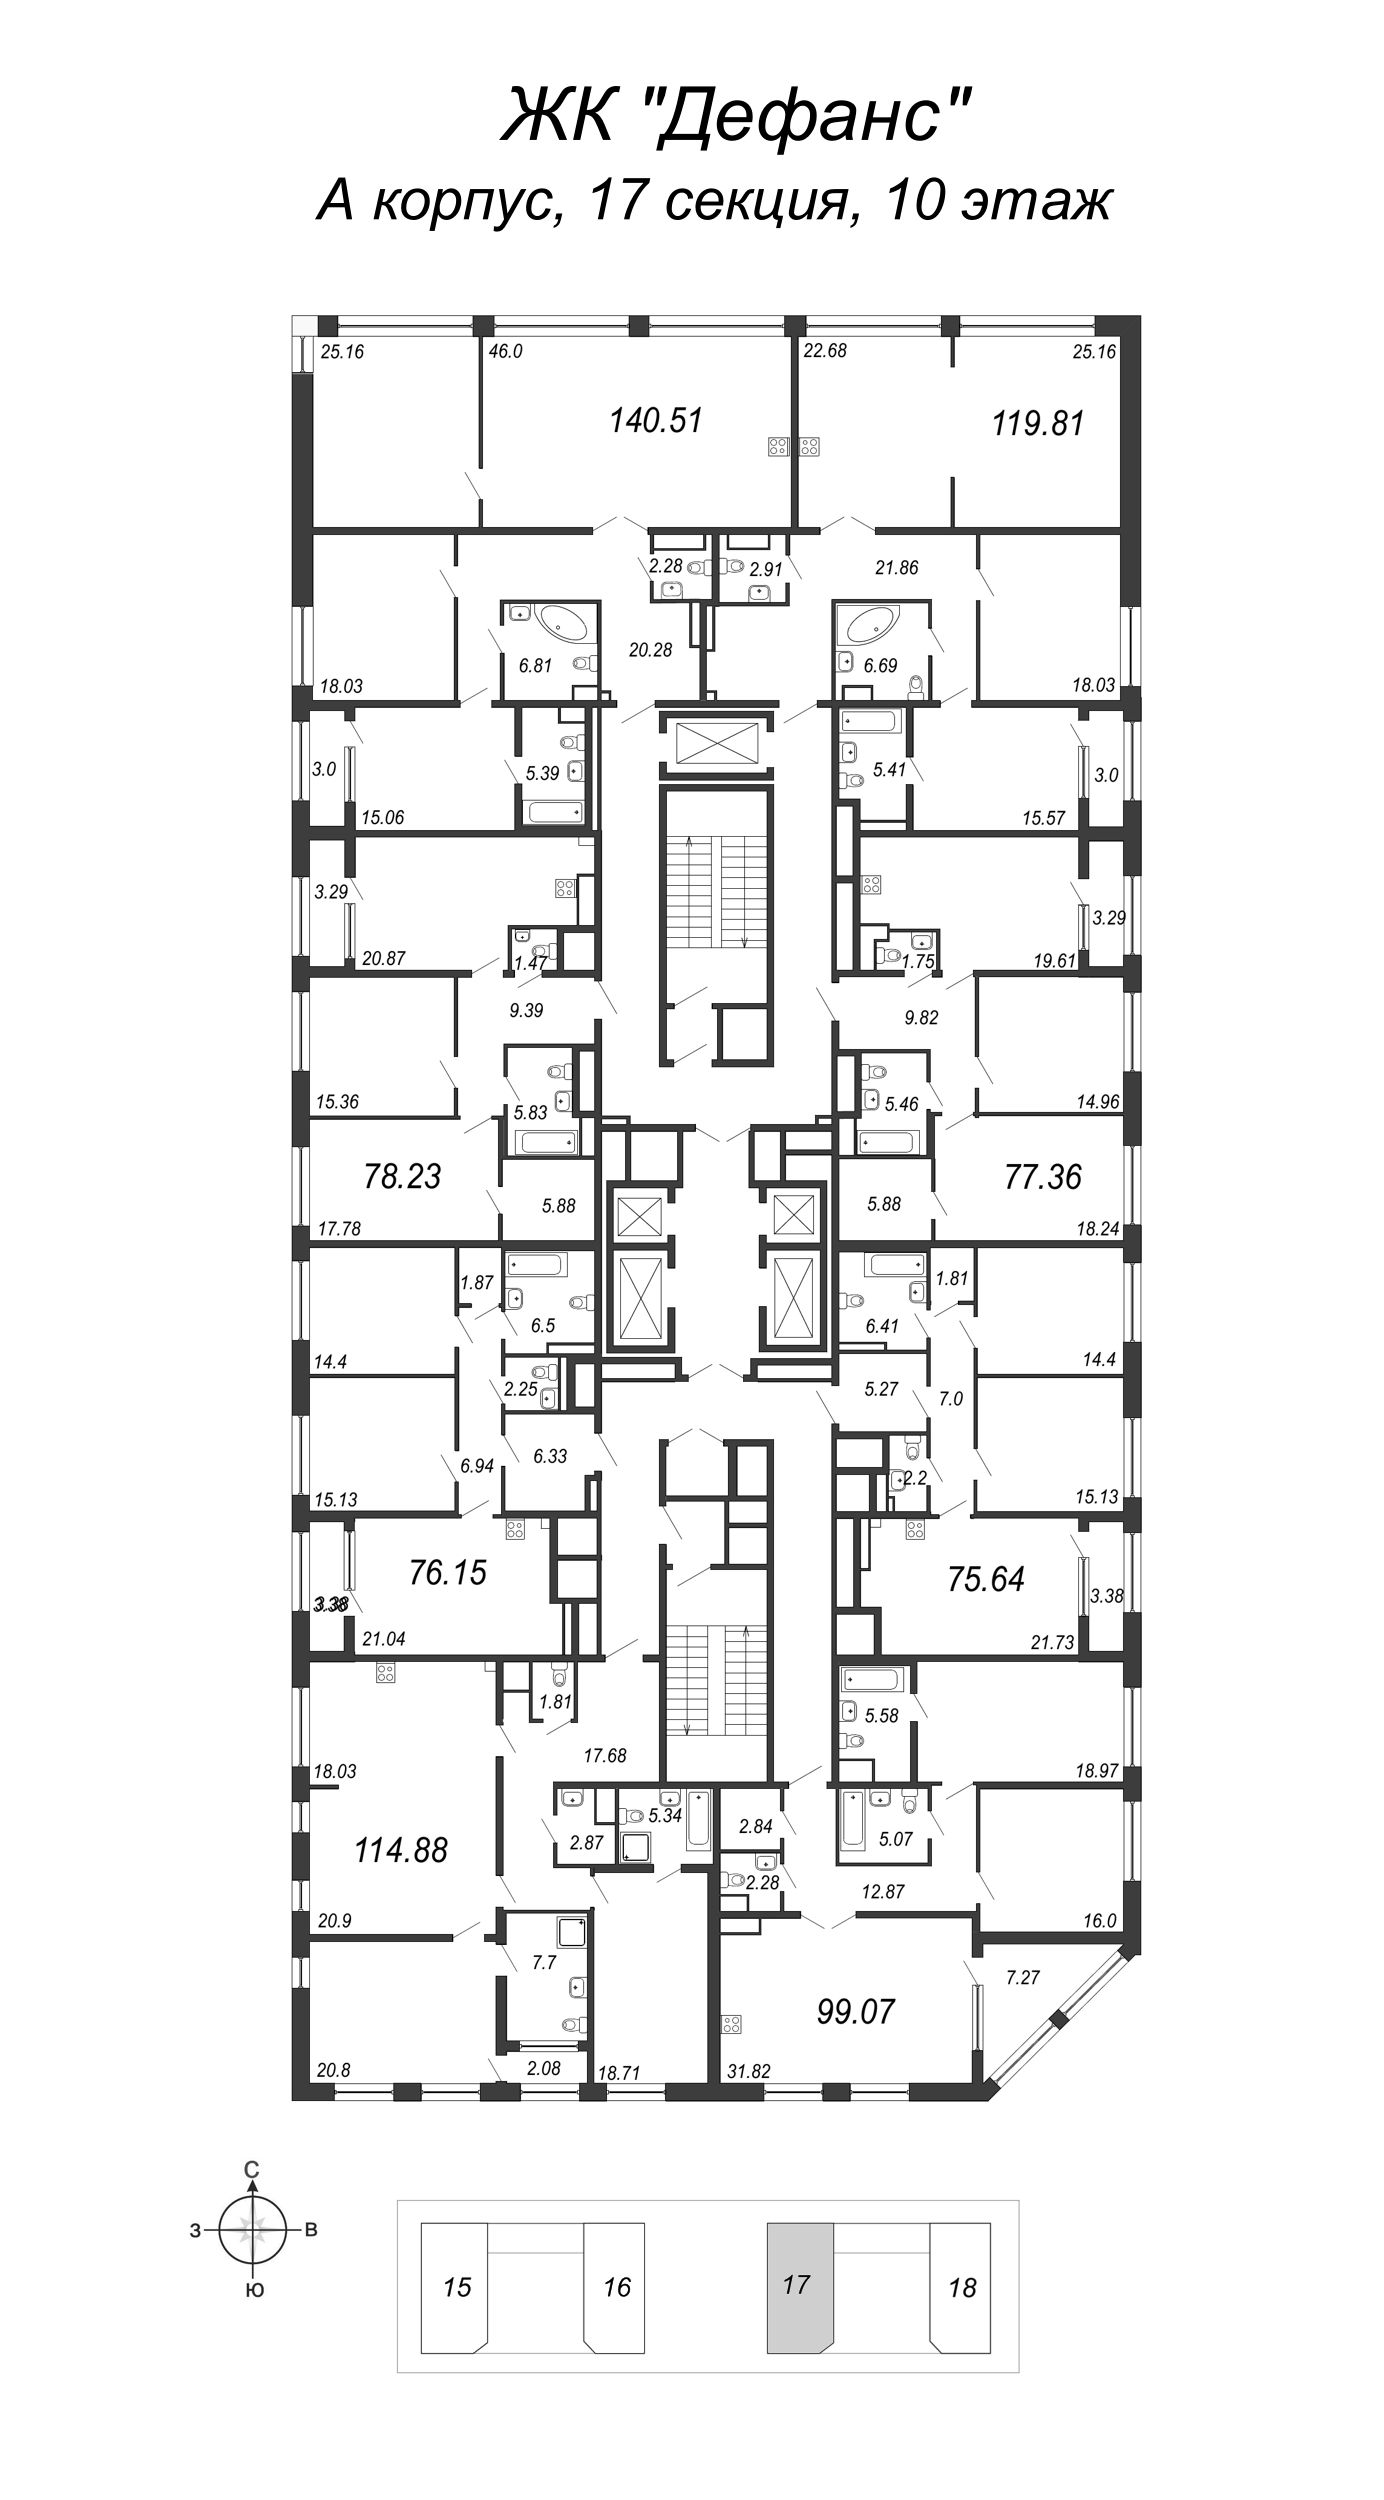 3-комнатная (Евро) квартира, 75.64 м² - планировка этажа